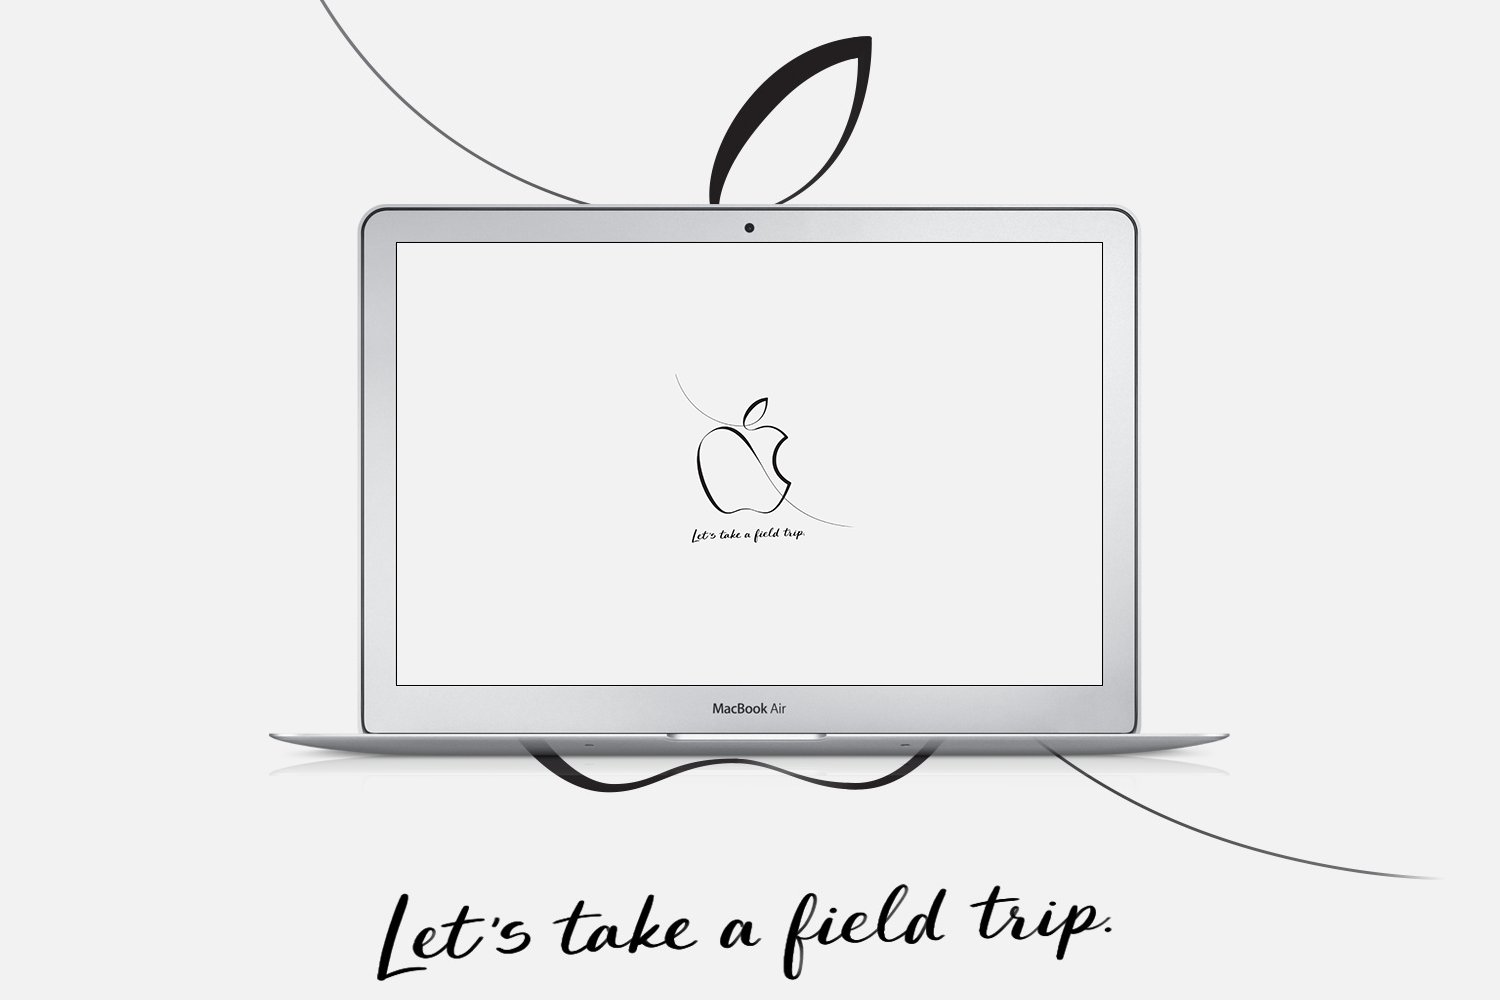 Appleのスペシャルイベント｢Left’s take a field trip｣の招待状デザインの壁紙